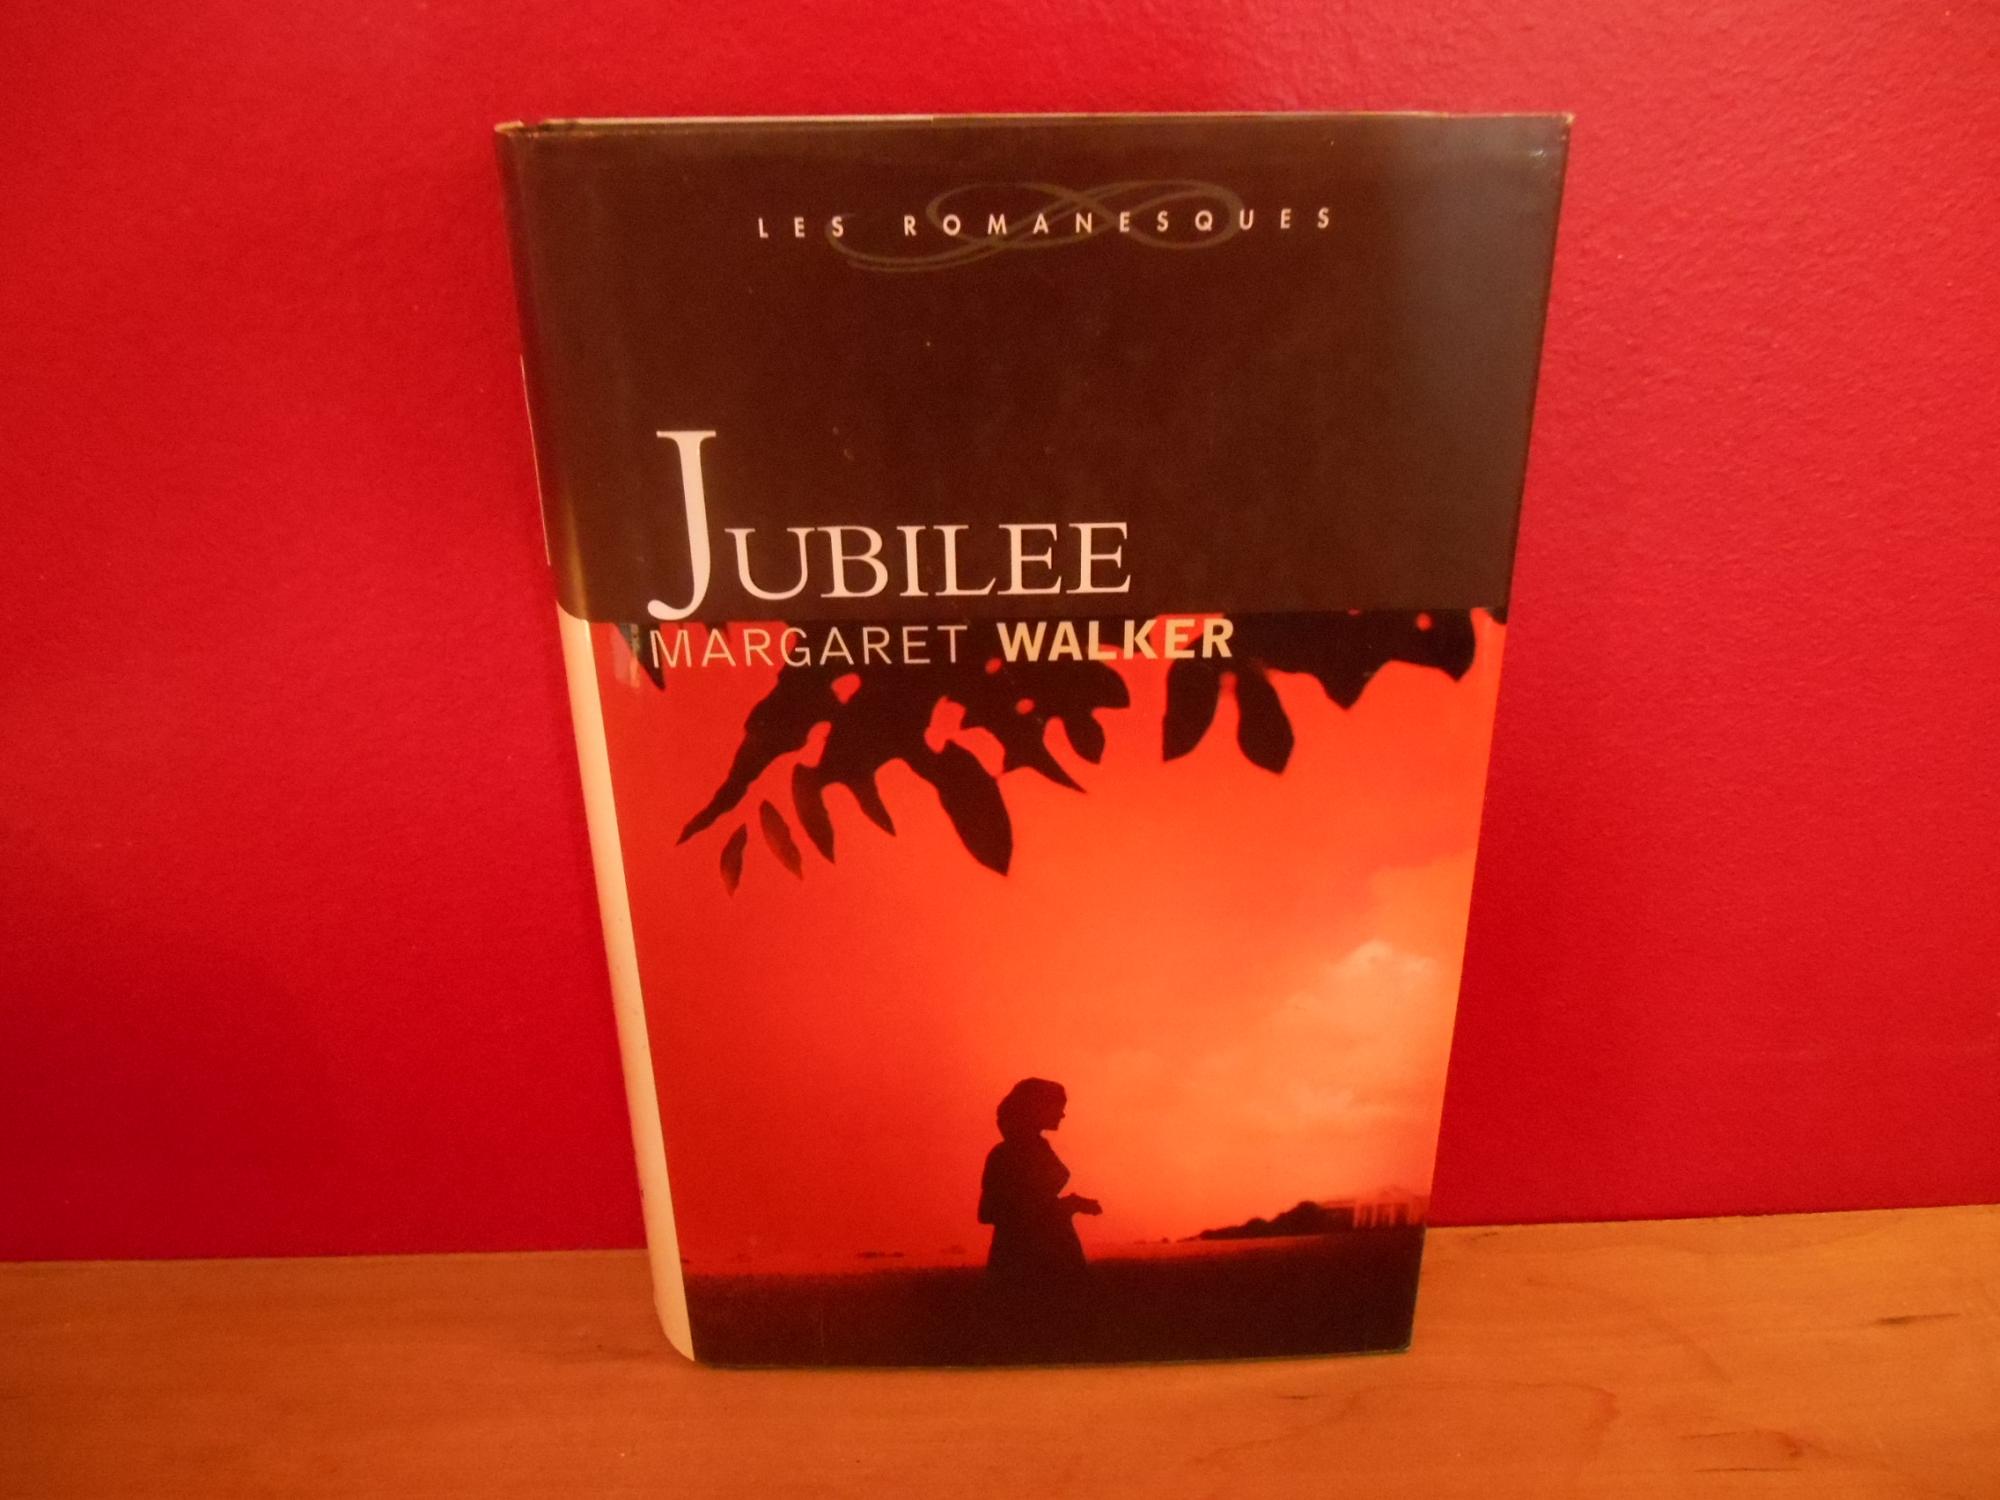 Jubilee (Les romanesques) - MARGARET WALKER